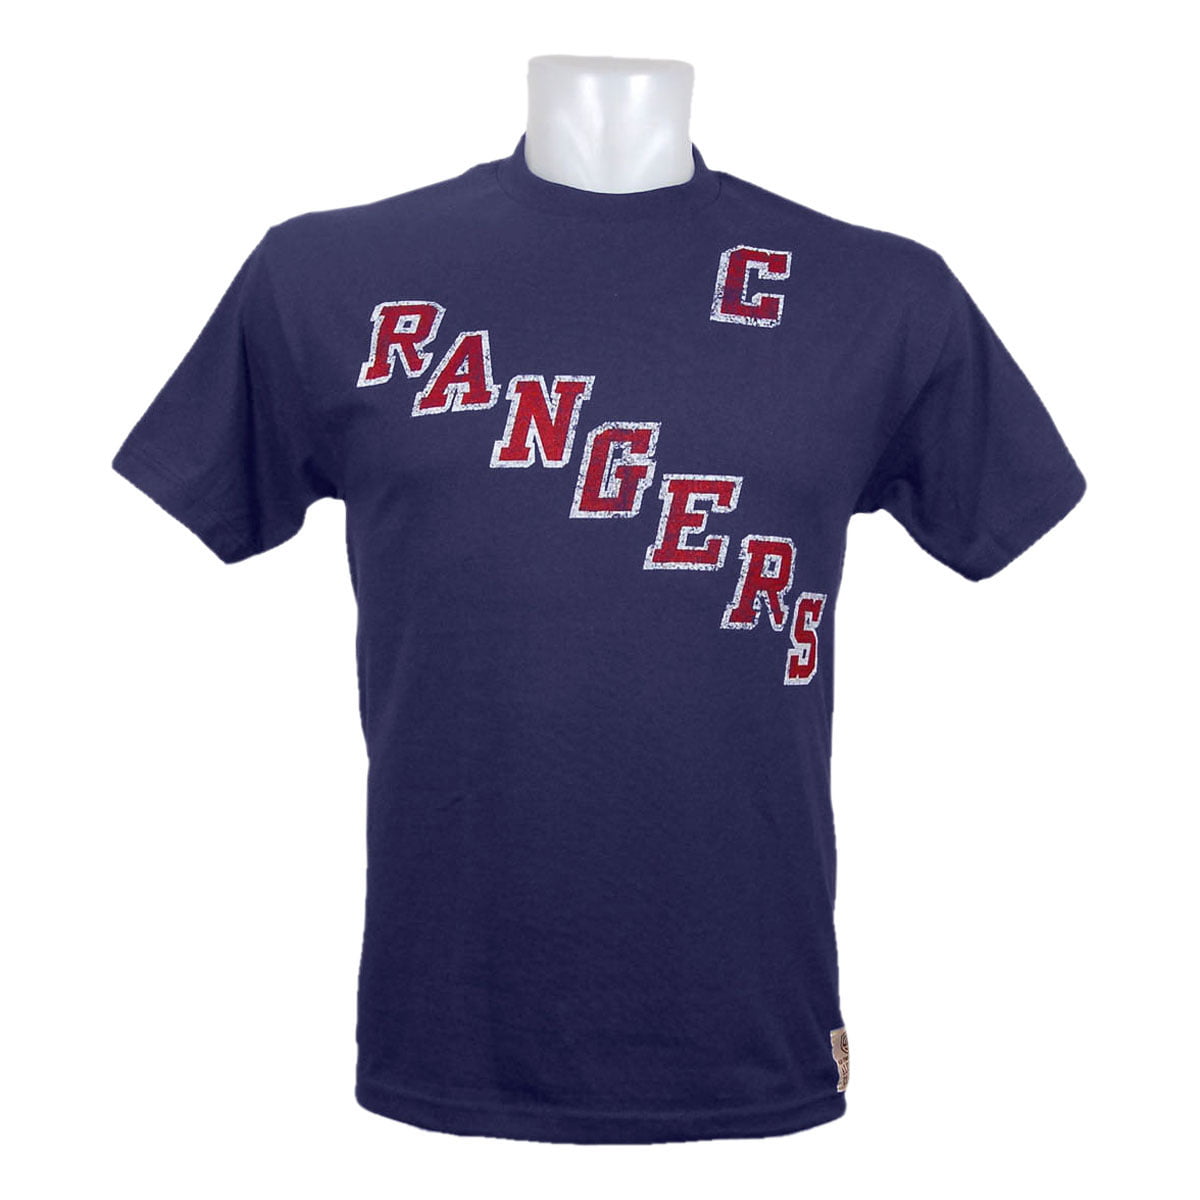 t shirt new york rangers